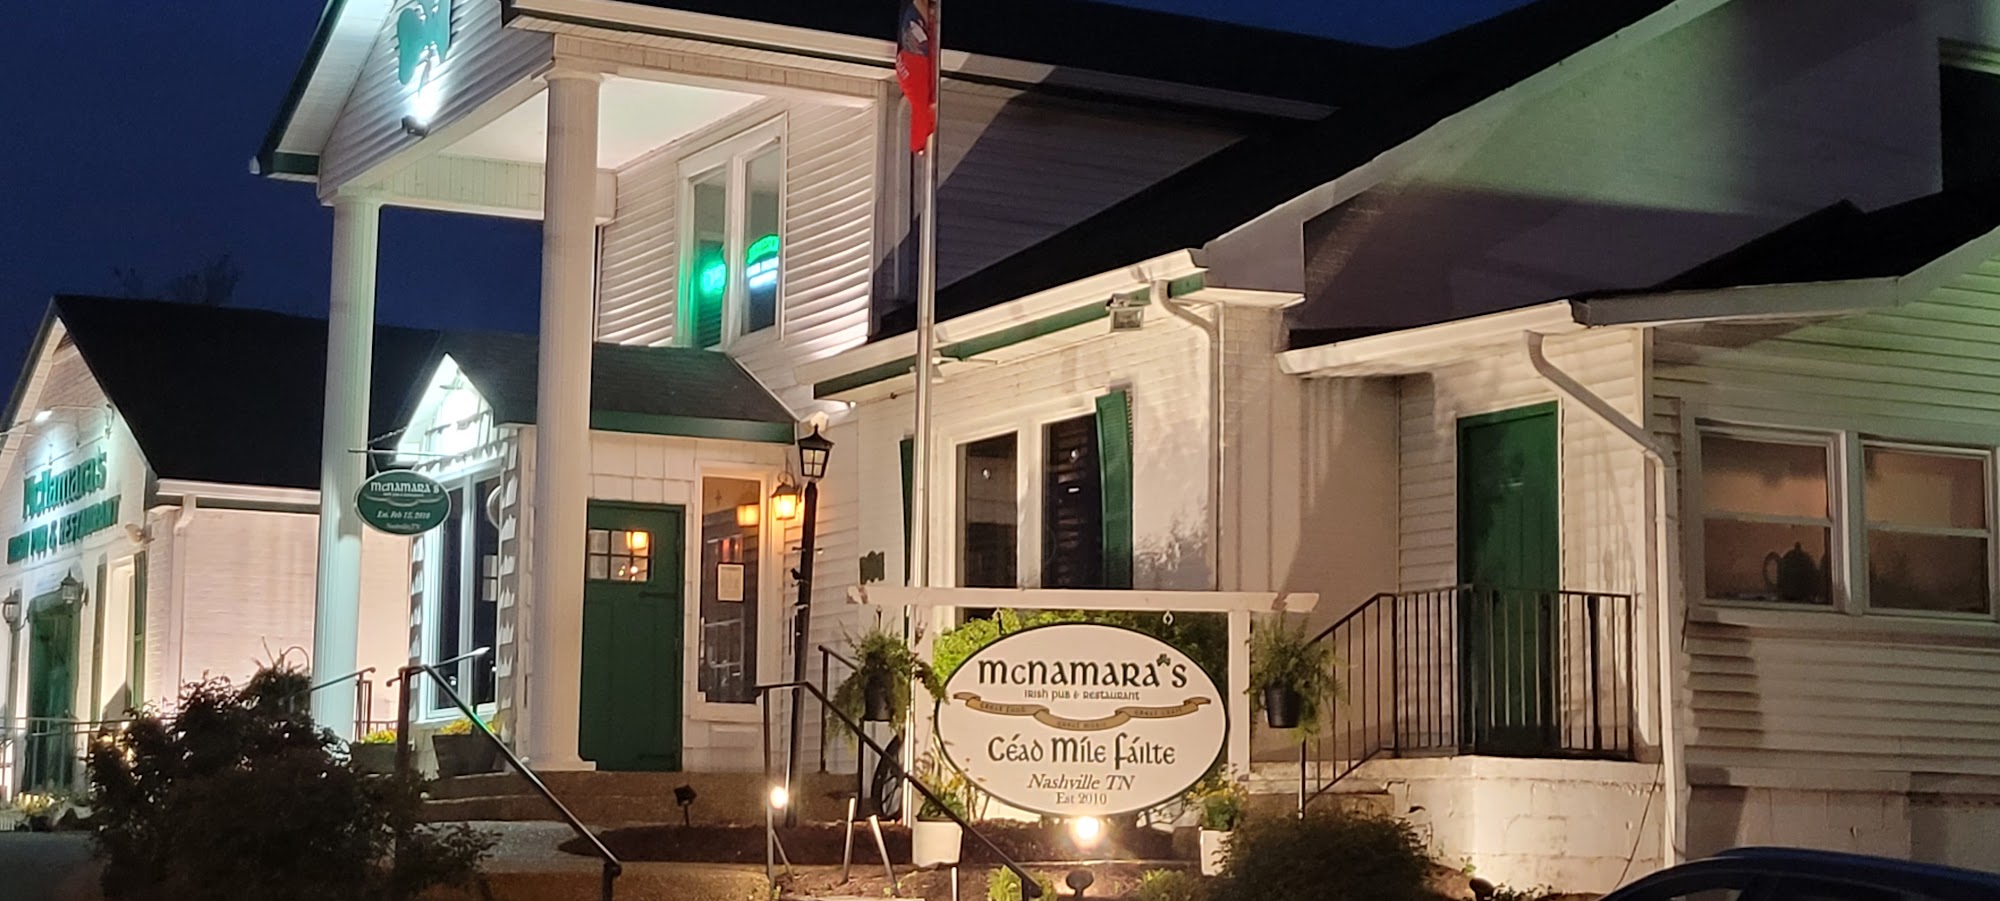 McNamara's Irish Pub & Restaurant